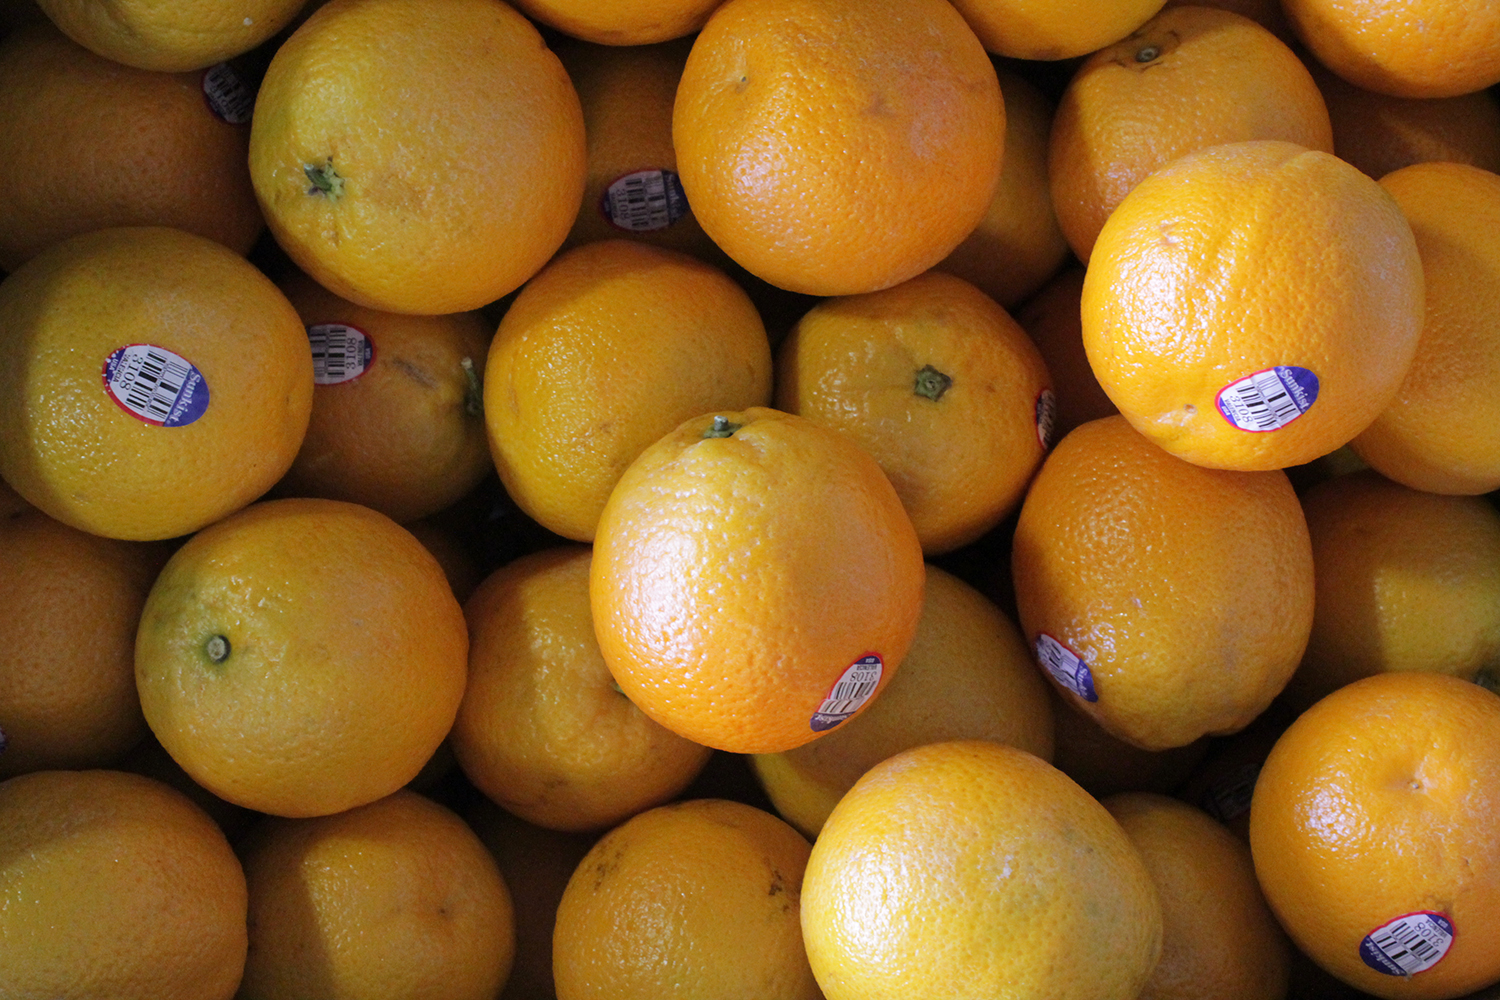 Sunkist oranges sold at Robt. t. Cochran & Co.